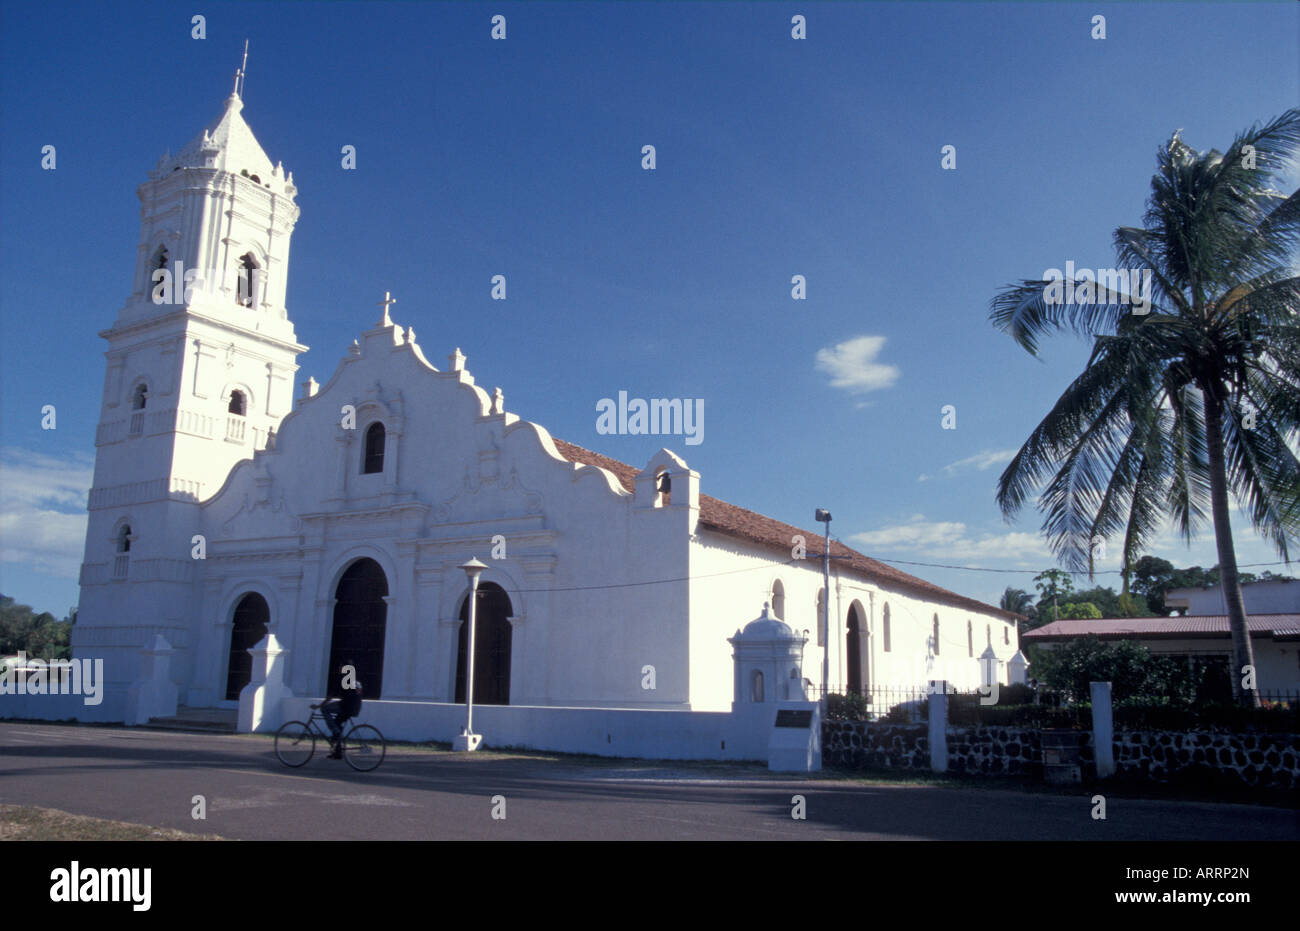 The historic Iglesia de Natá church in the town of Natá, Coclé province, Panama Stock Photo